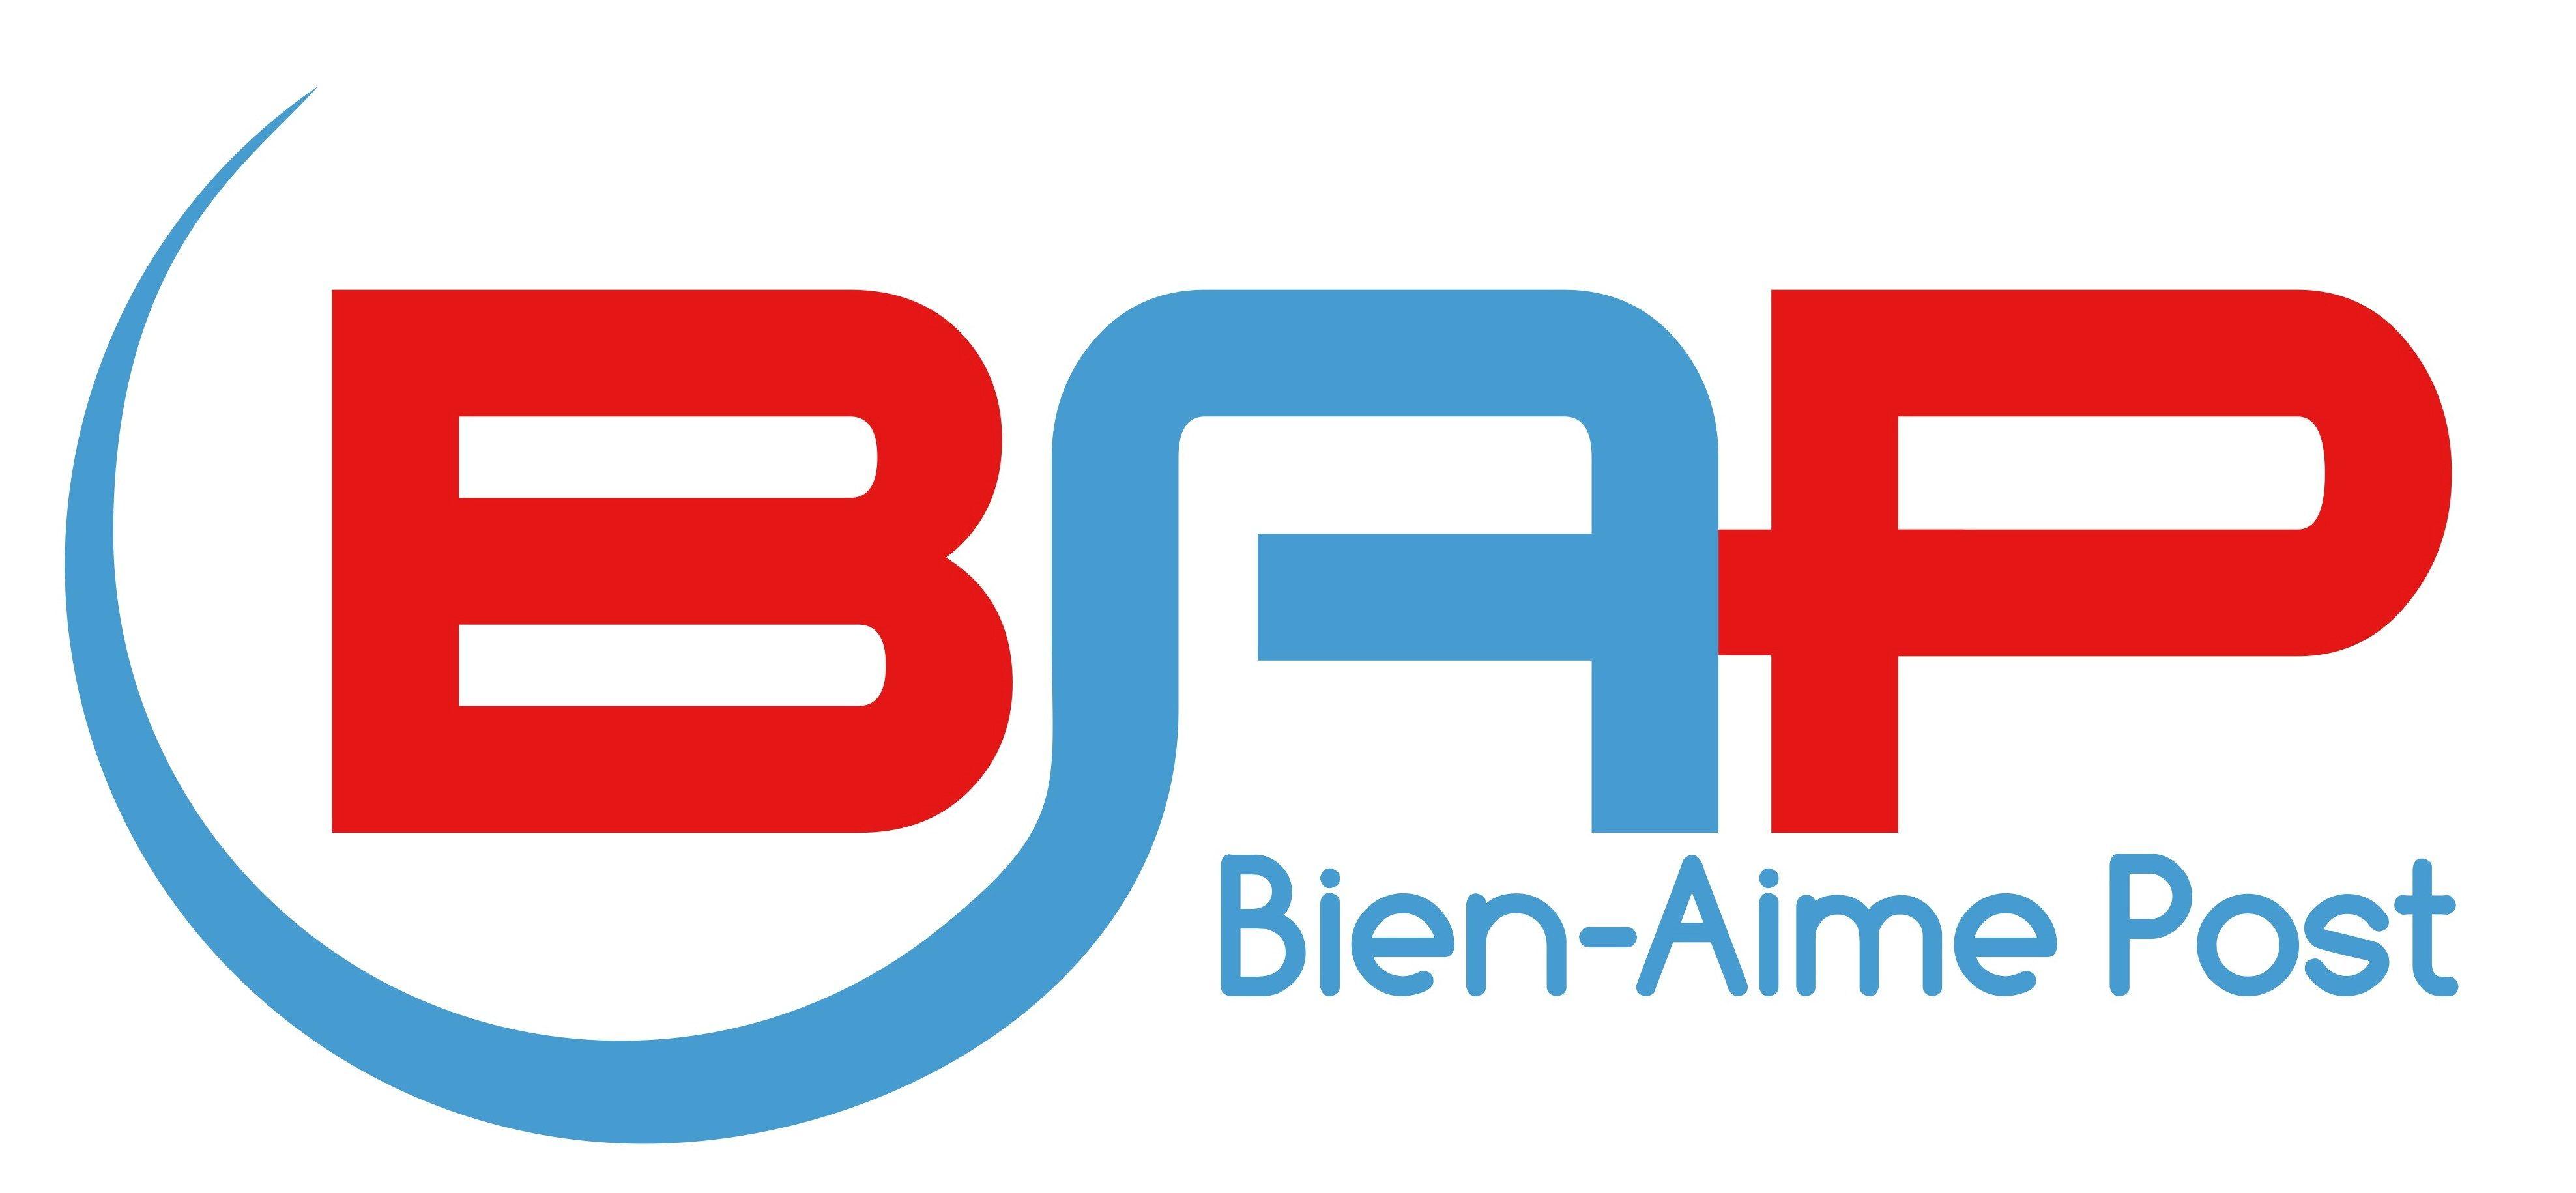 Bap Logo - BAP Logo 2016 Aime Post